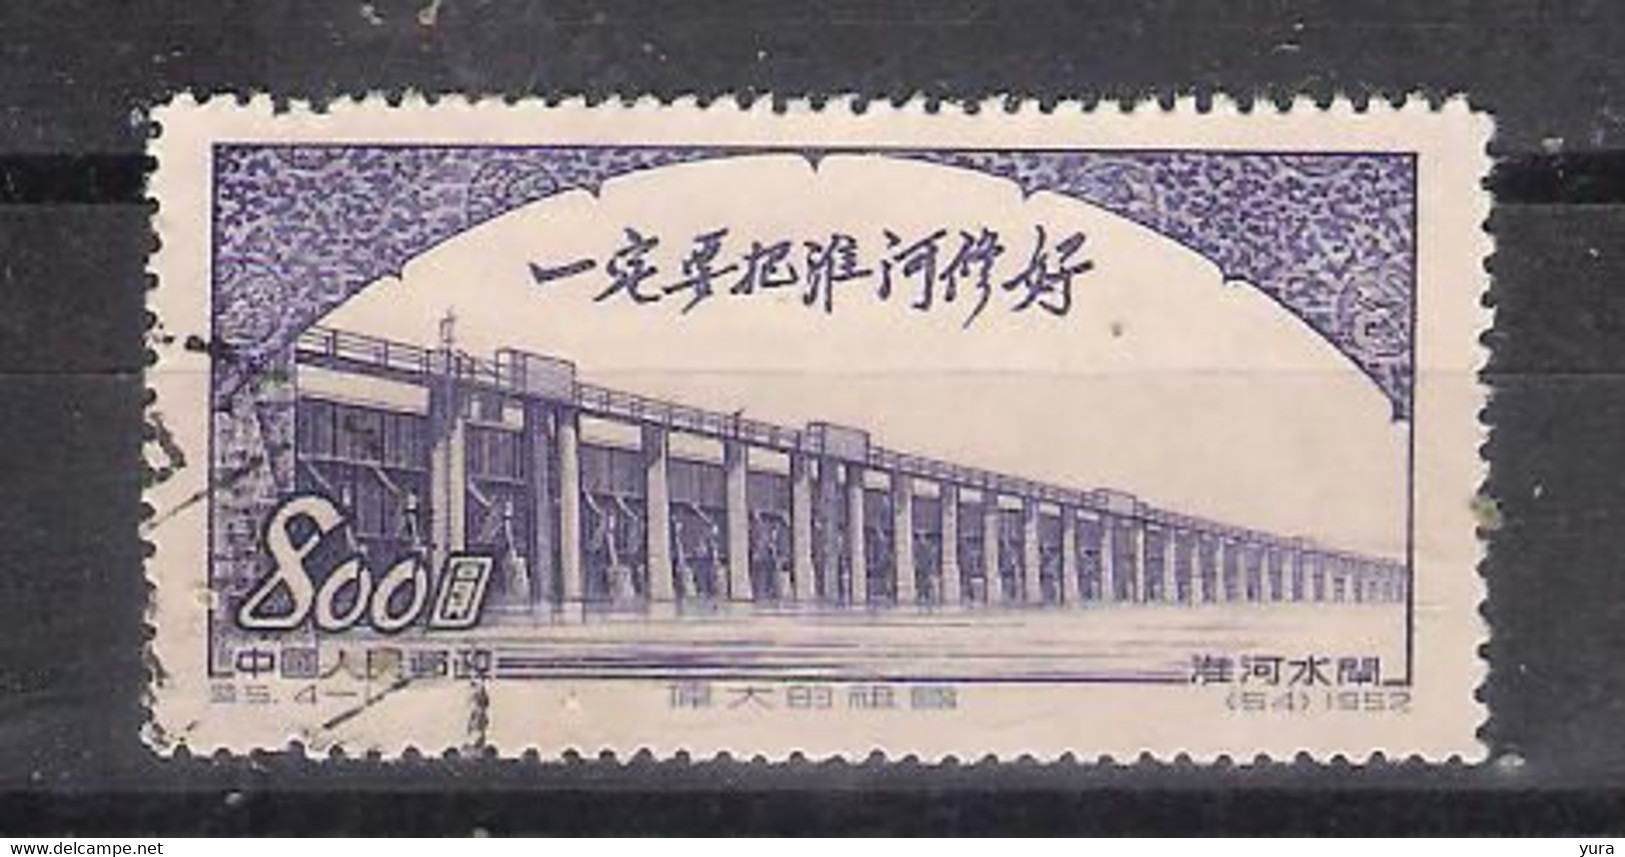 Chine Peoples  Republic  1952  Mi Nr 183  (a8p2) - Gebraucht